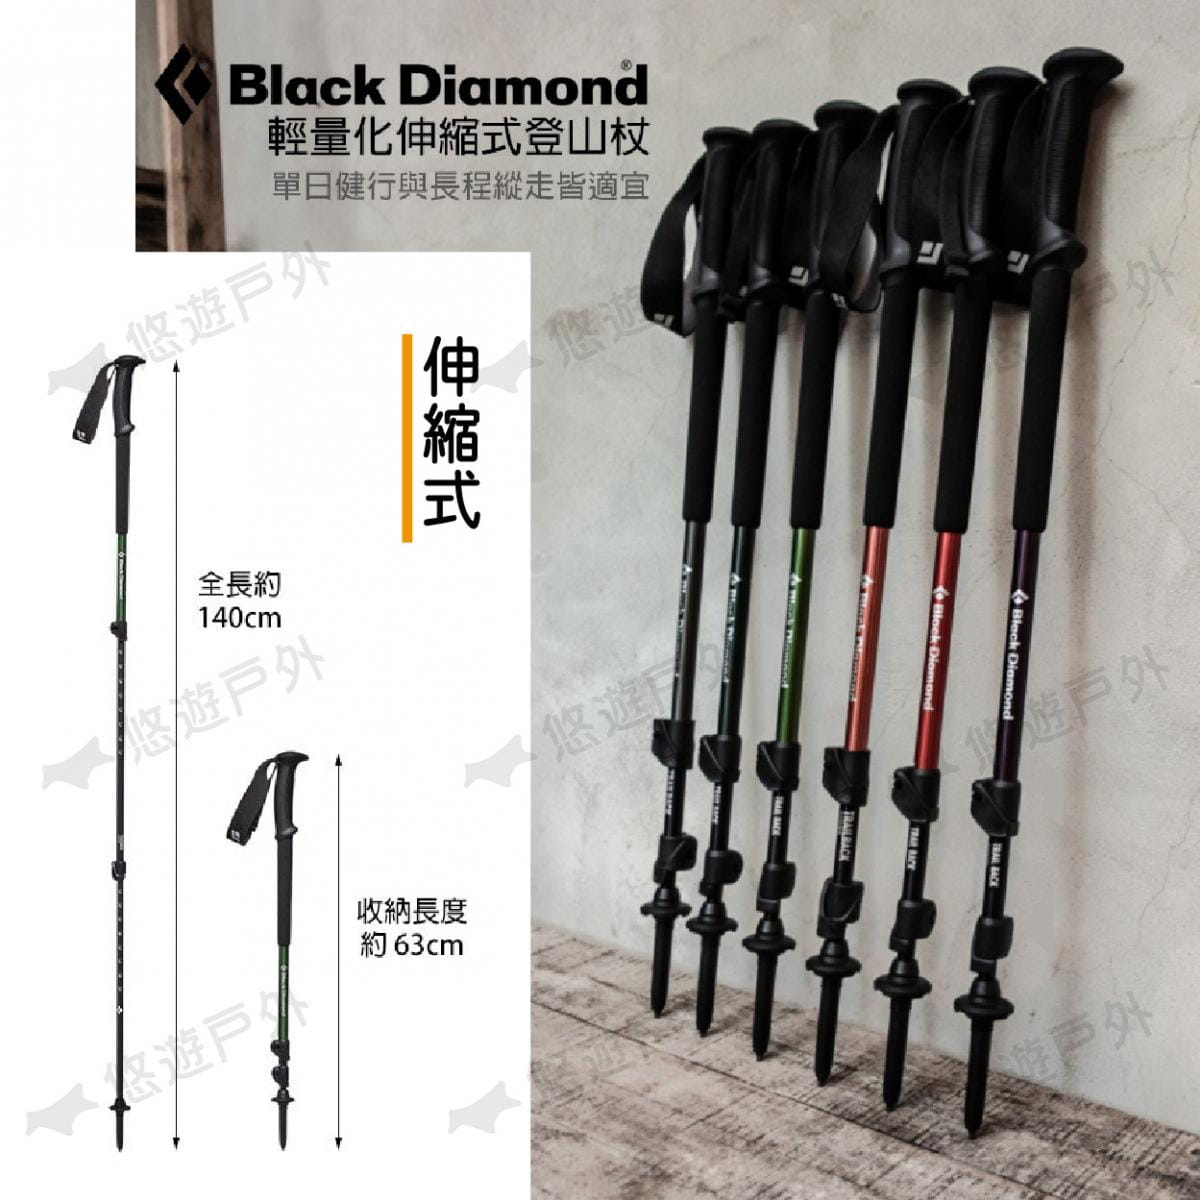 【Black Diamond】TRAIL BACK 航太級鋁合金折疊登山杖 112227 快扣設計 3